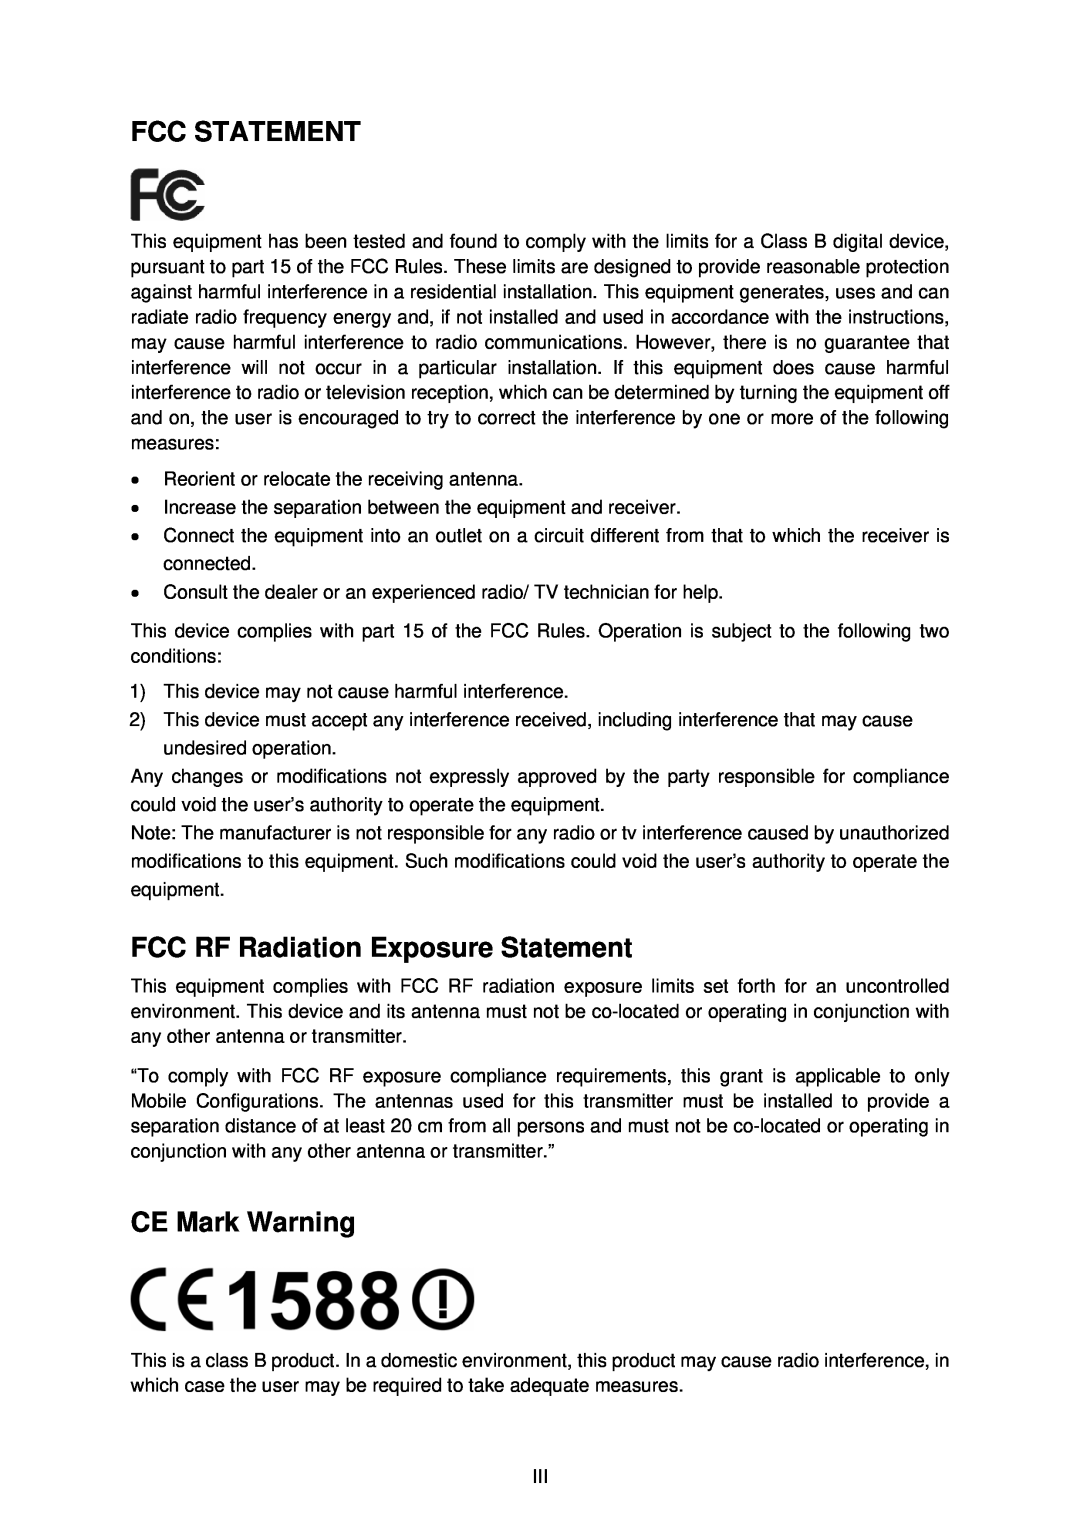 TP-Link TL-WR340GD manual Fcc Statement, FCC RF Radiation Exposure Statement, CE Mark Warning 